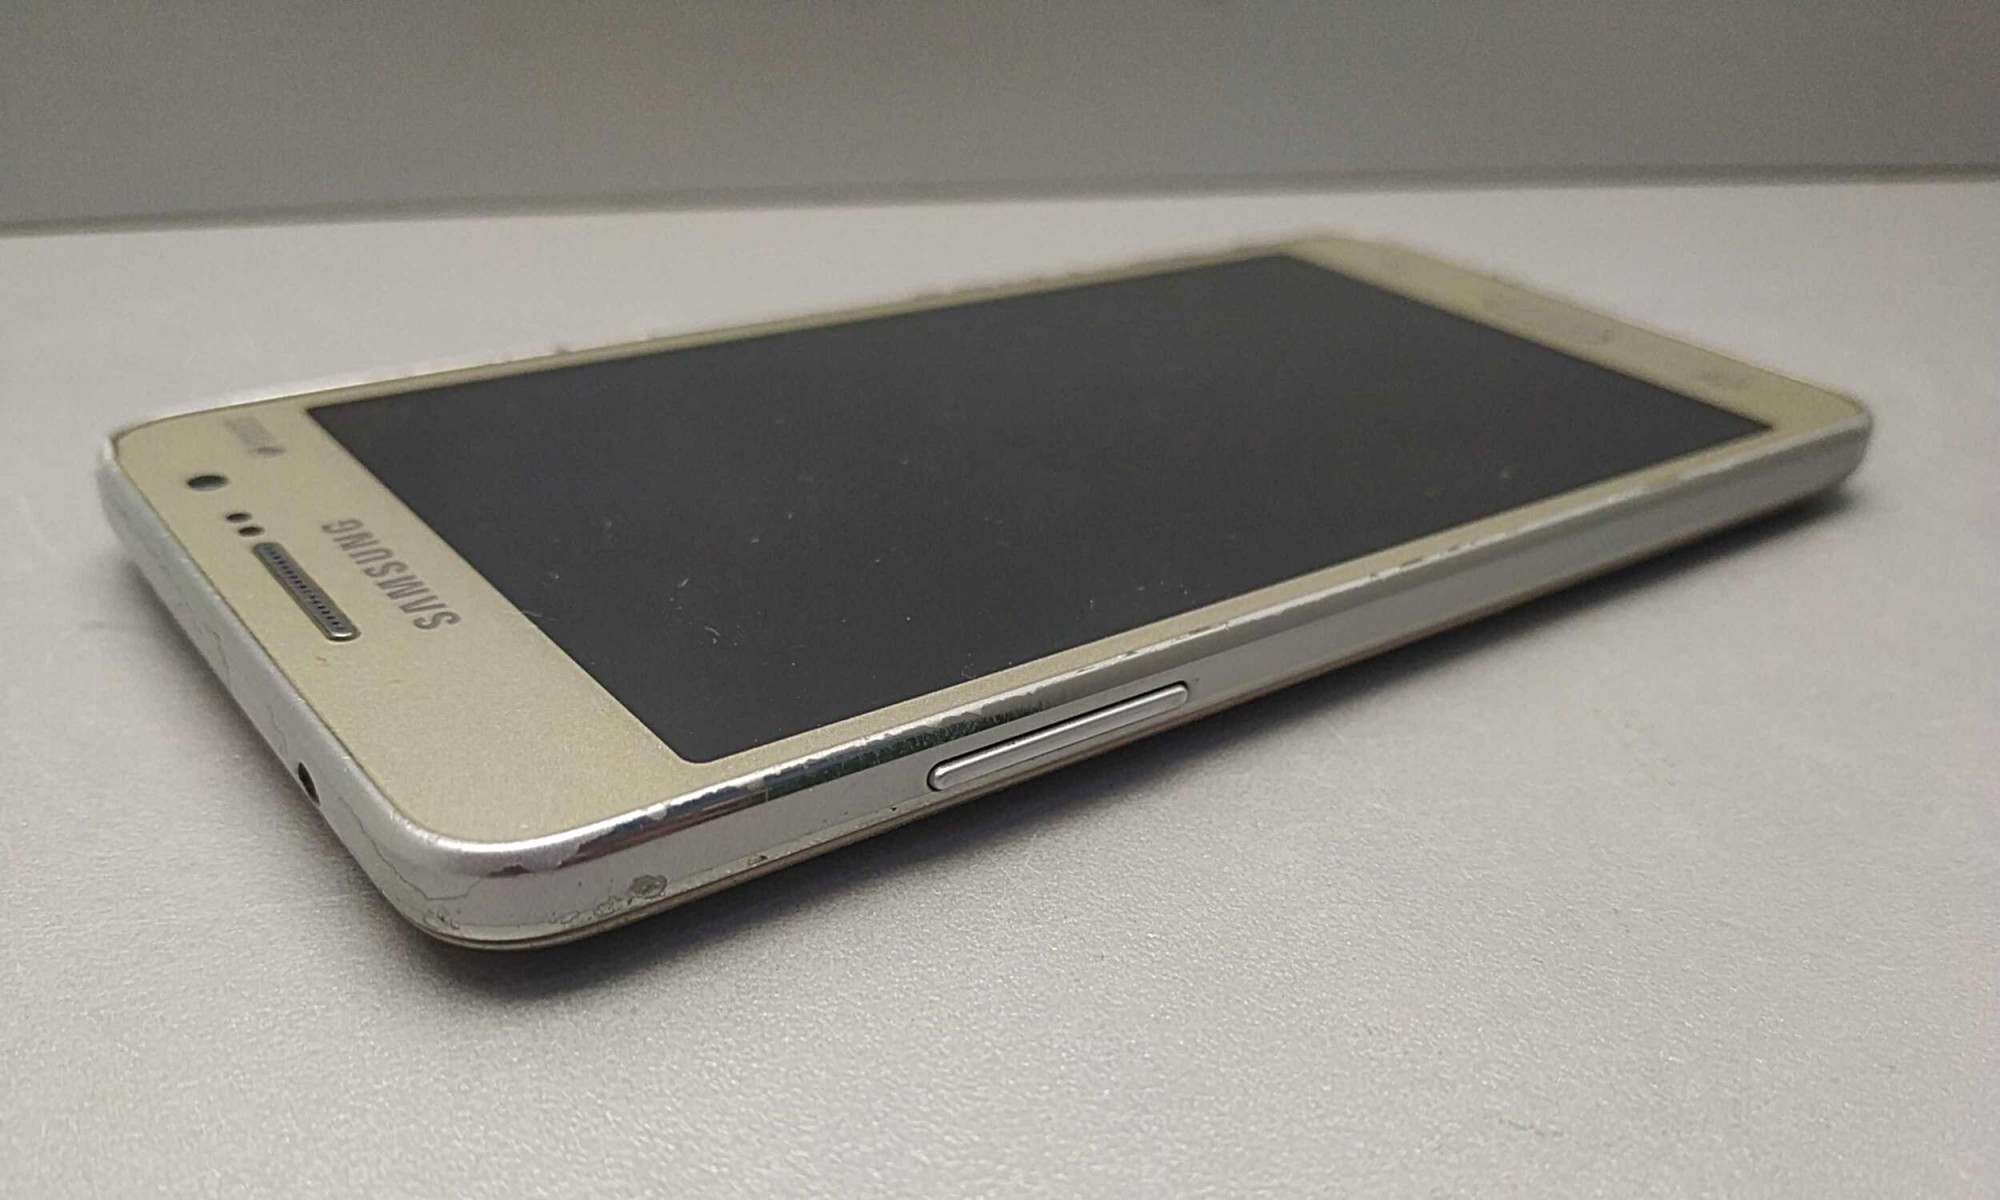 Samsung Galaxy Grand Prime VE (SM-G531H) 1/8Gb 5